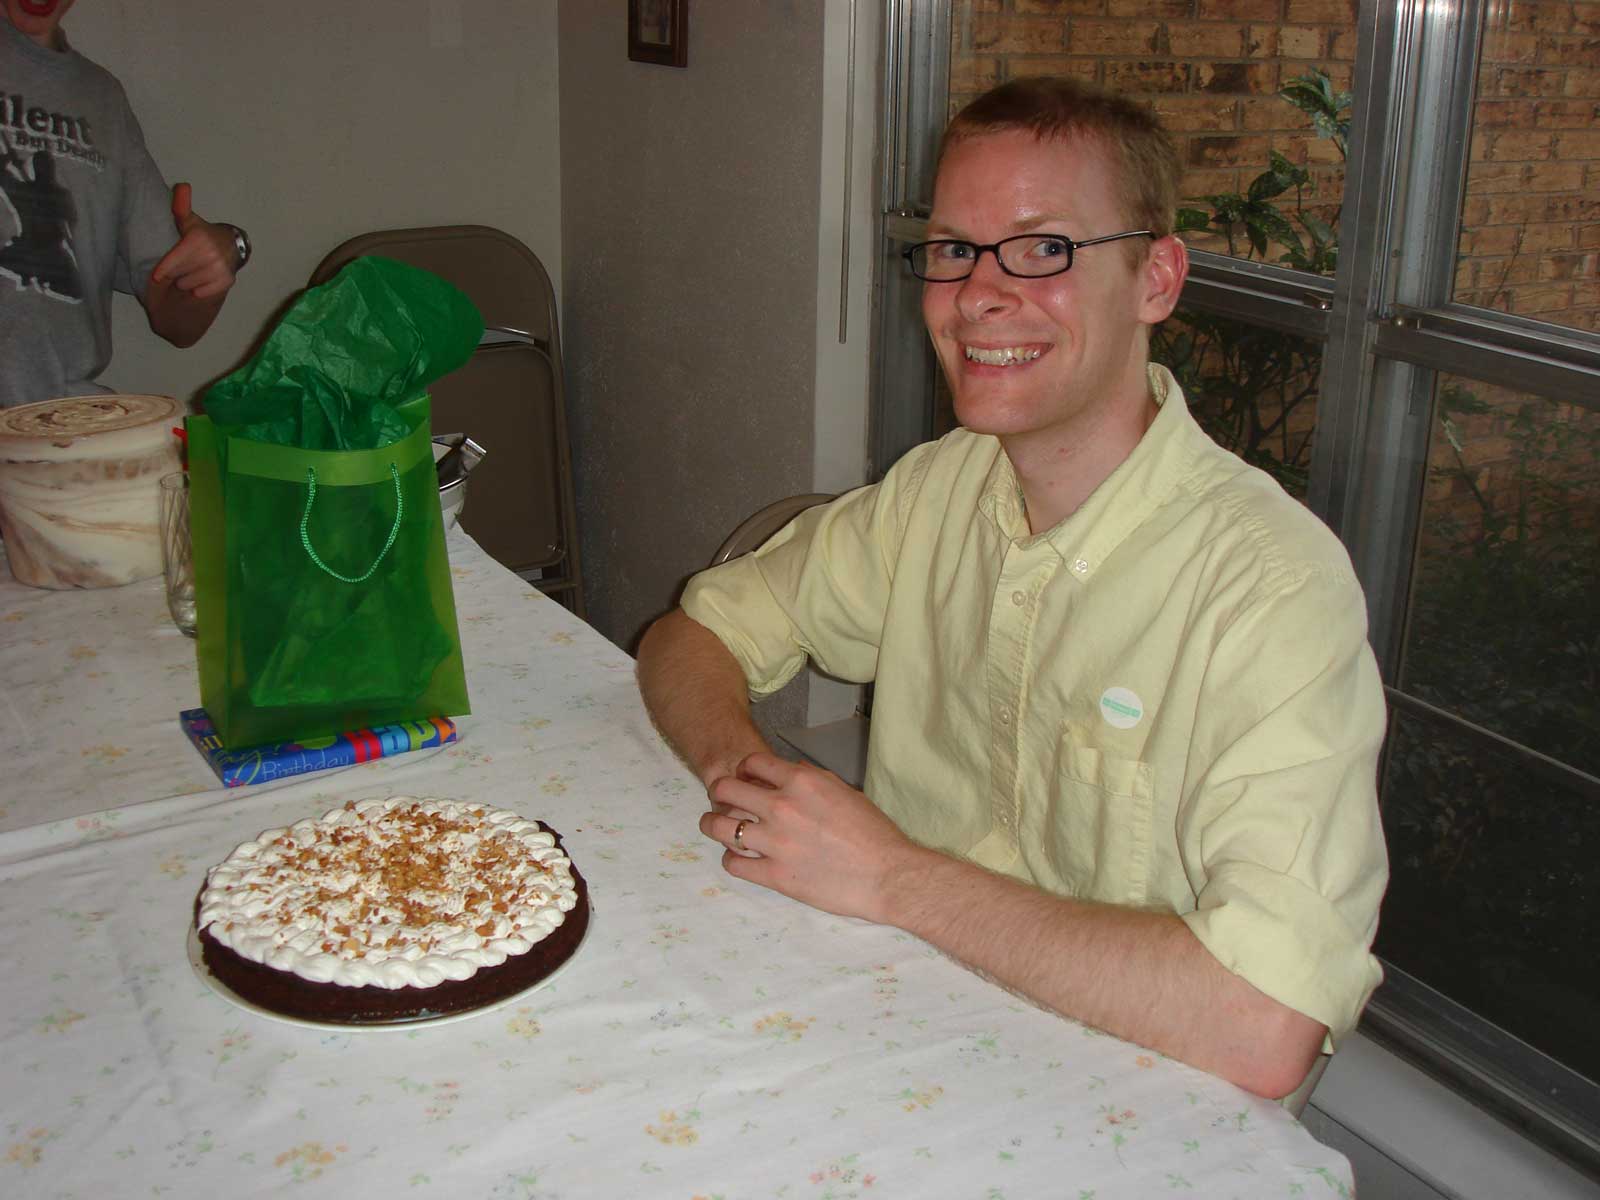 William and his birthday cake